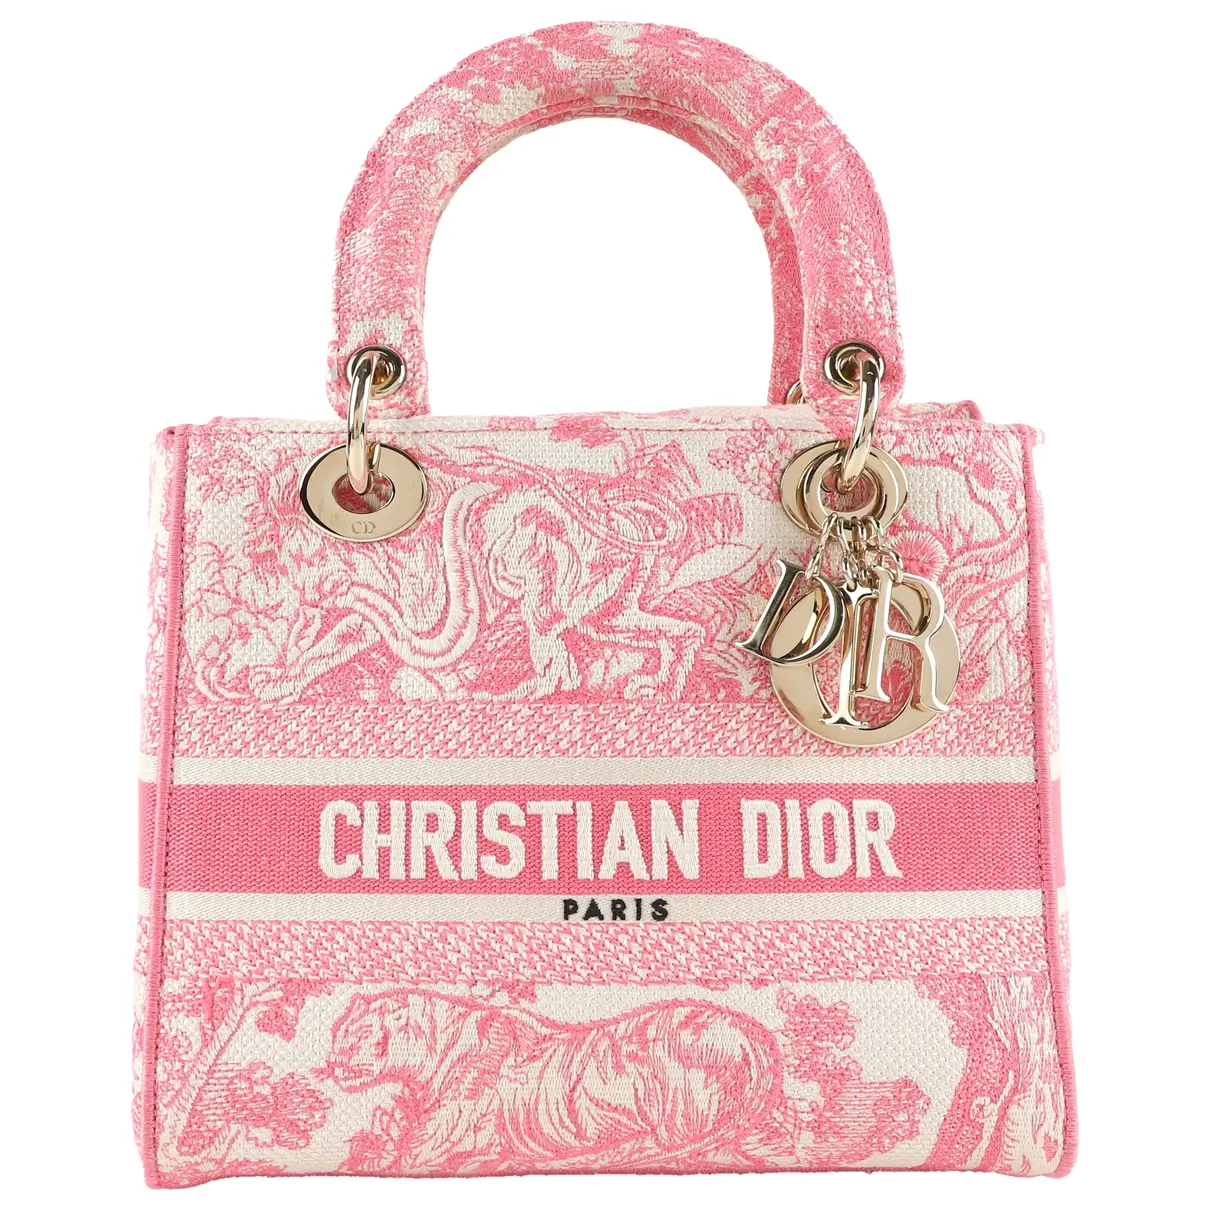 Lady Dior cloth handbag